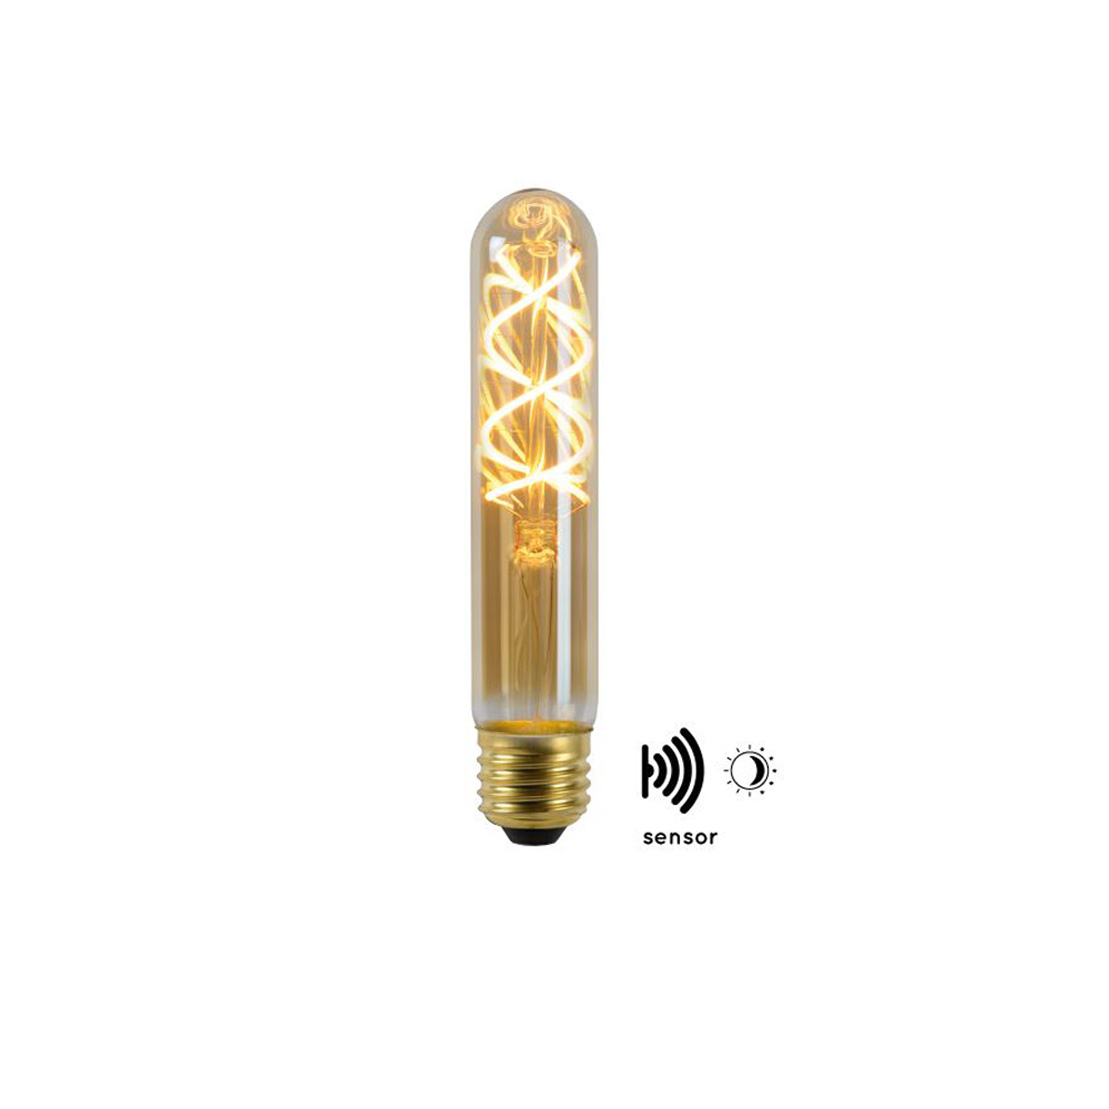 Lucide LED BULB TWILIGHT SENSOR -UlkoFilamentBulb - Ø 3 cm - LED - E27 - 1x4W 2200K - Amber